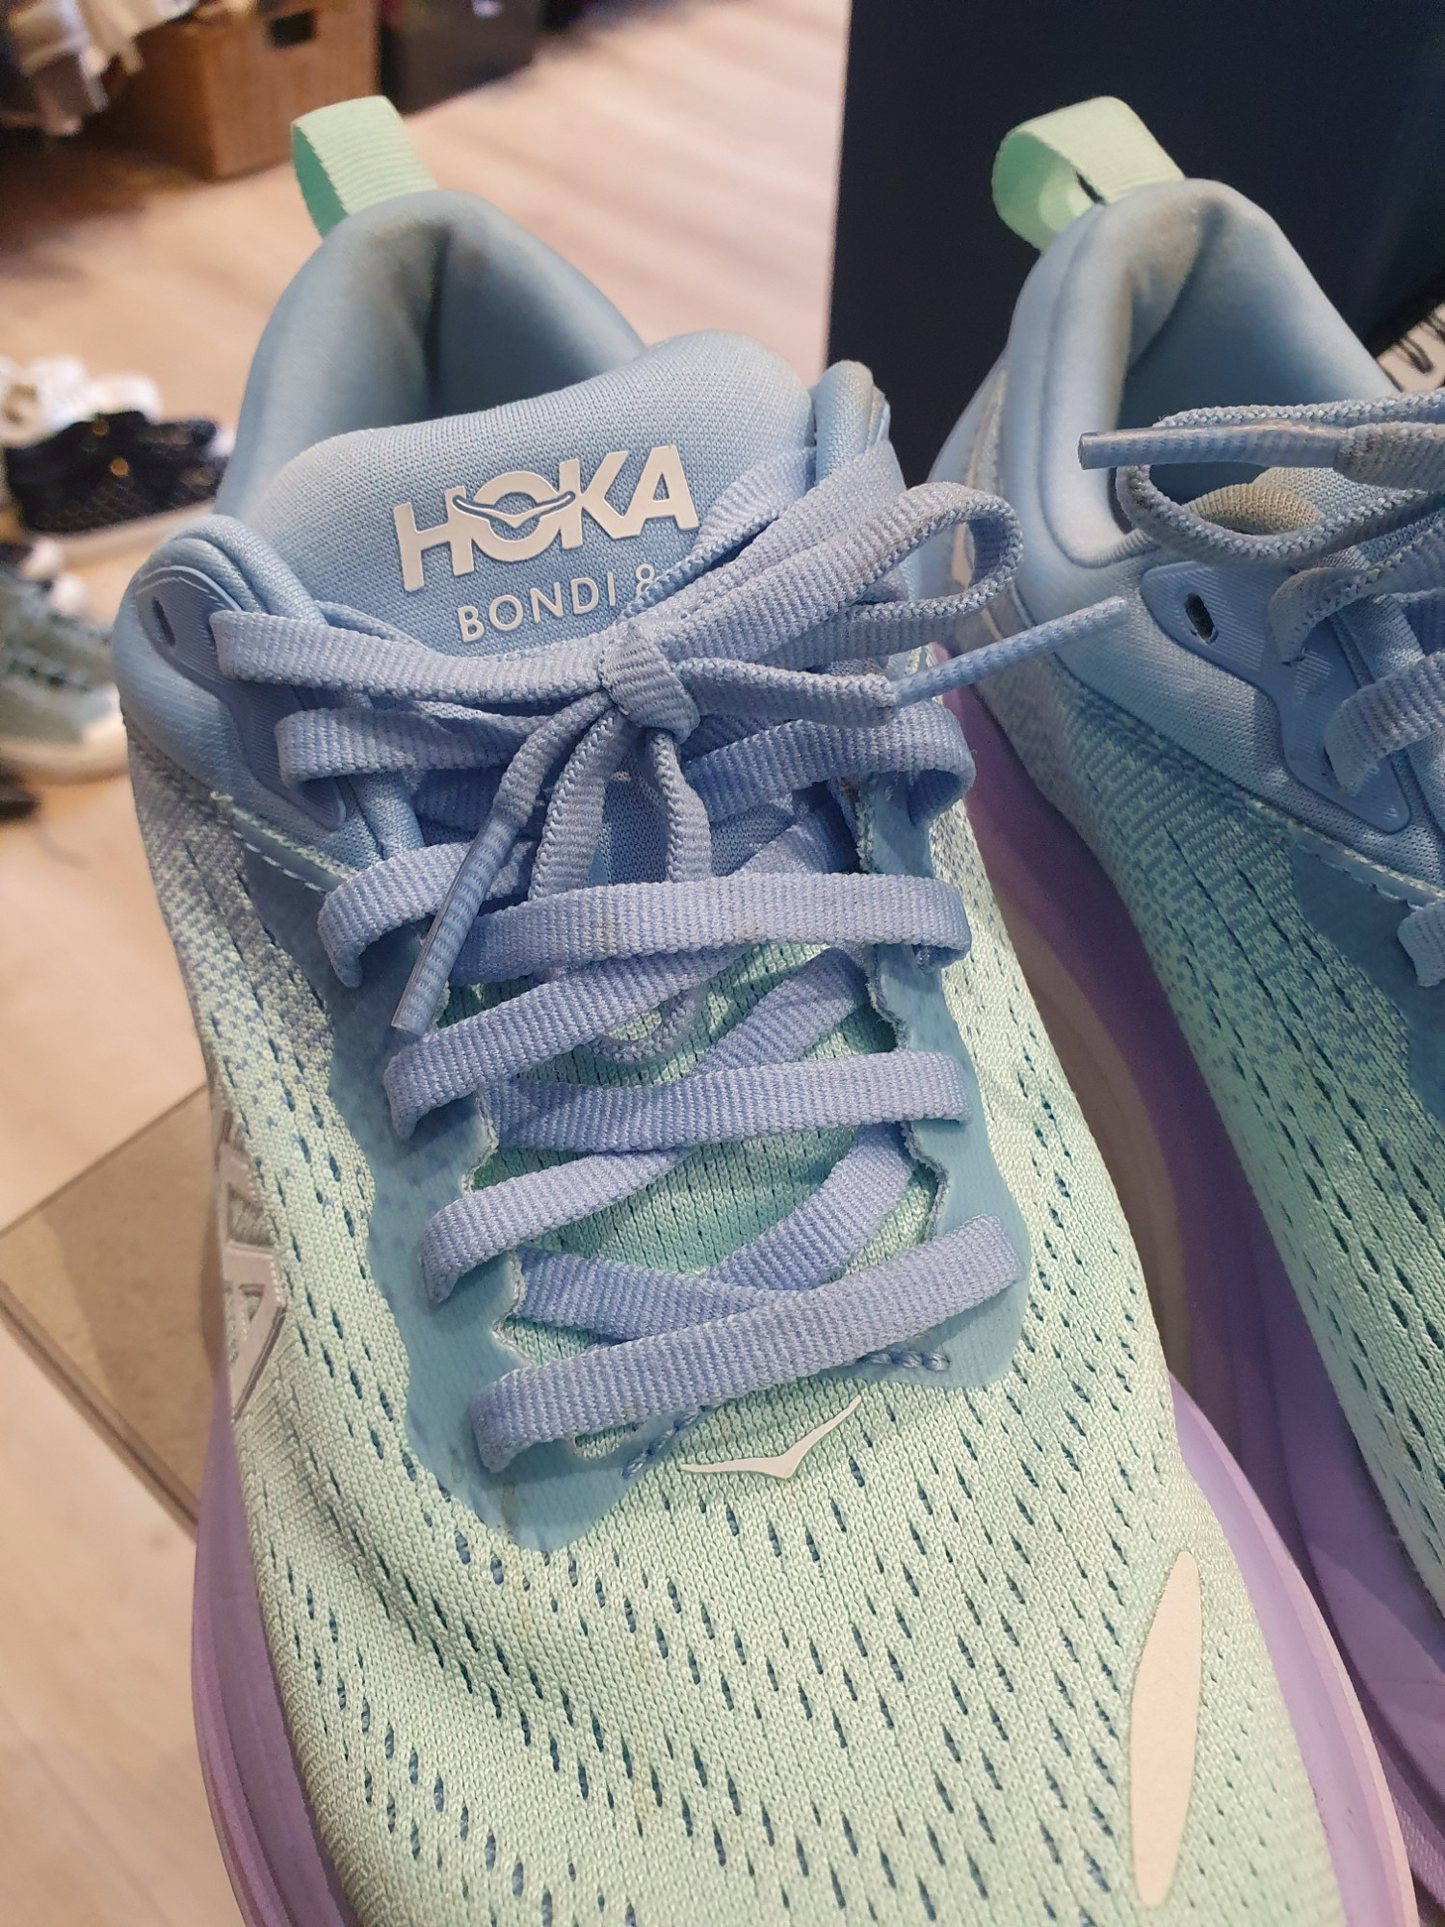 Hoka Bondi 8, blue trainers, size 4